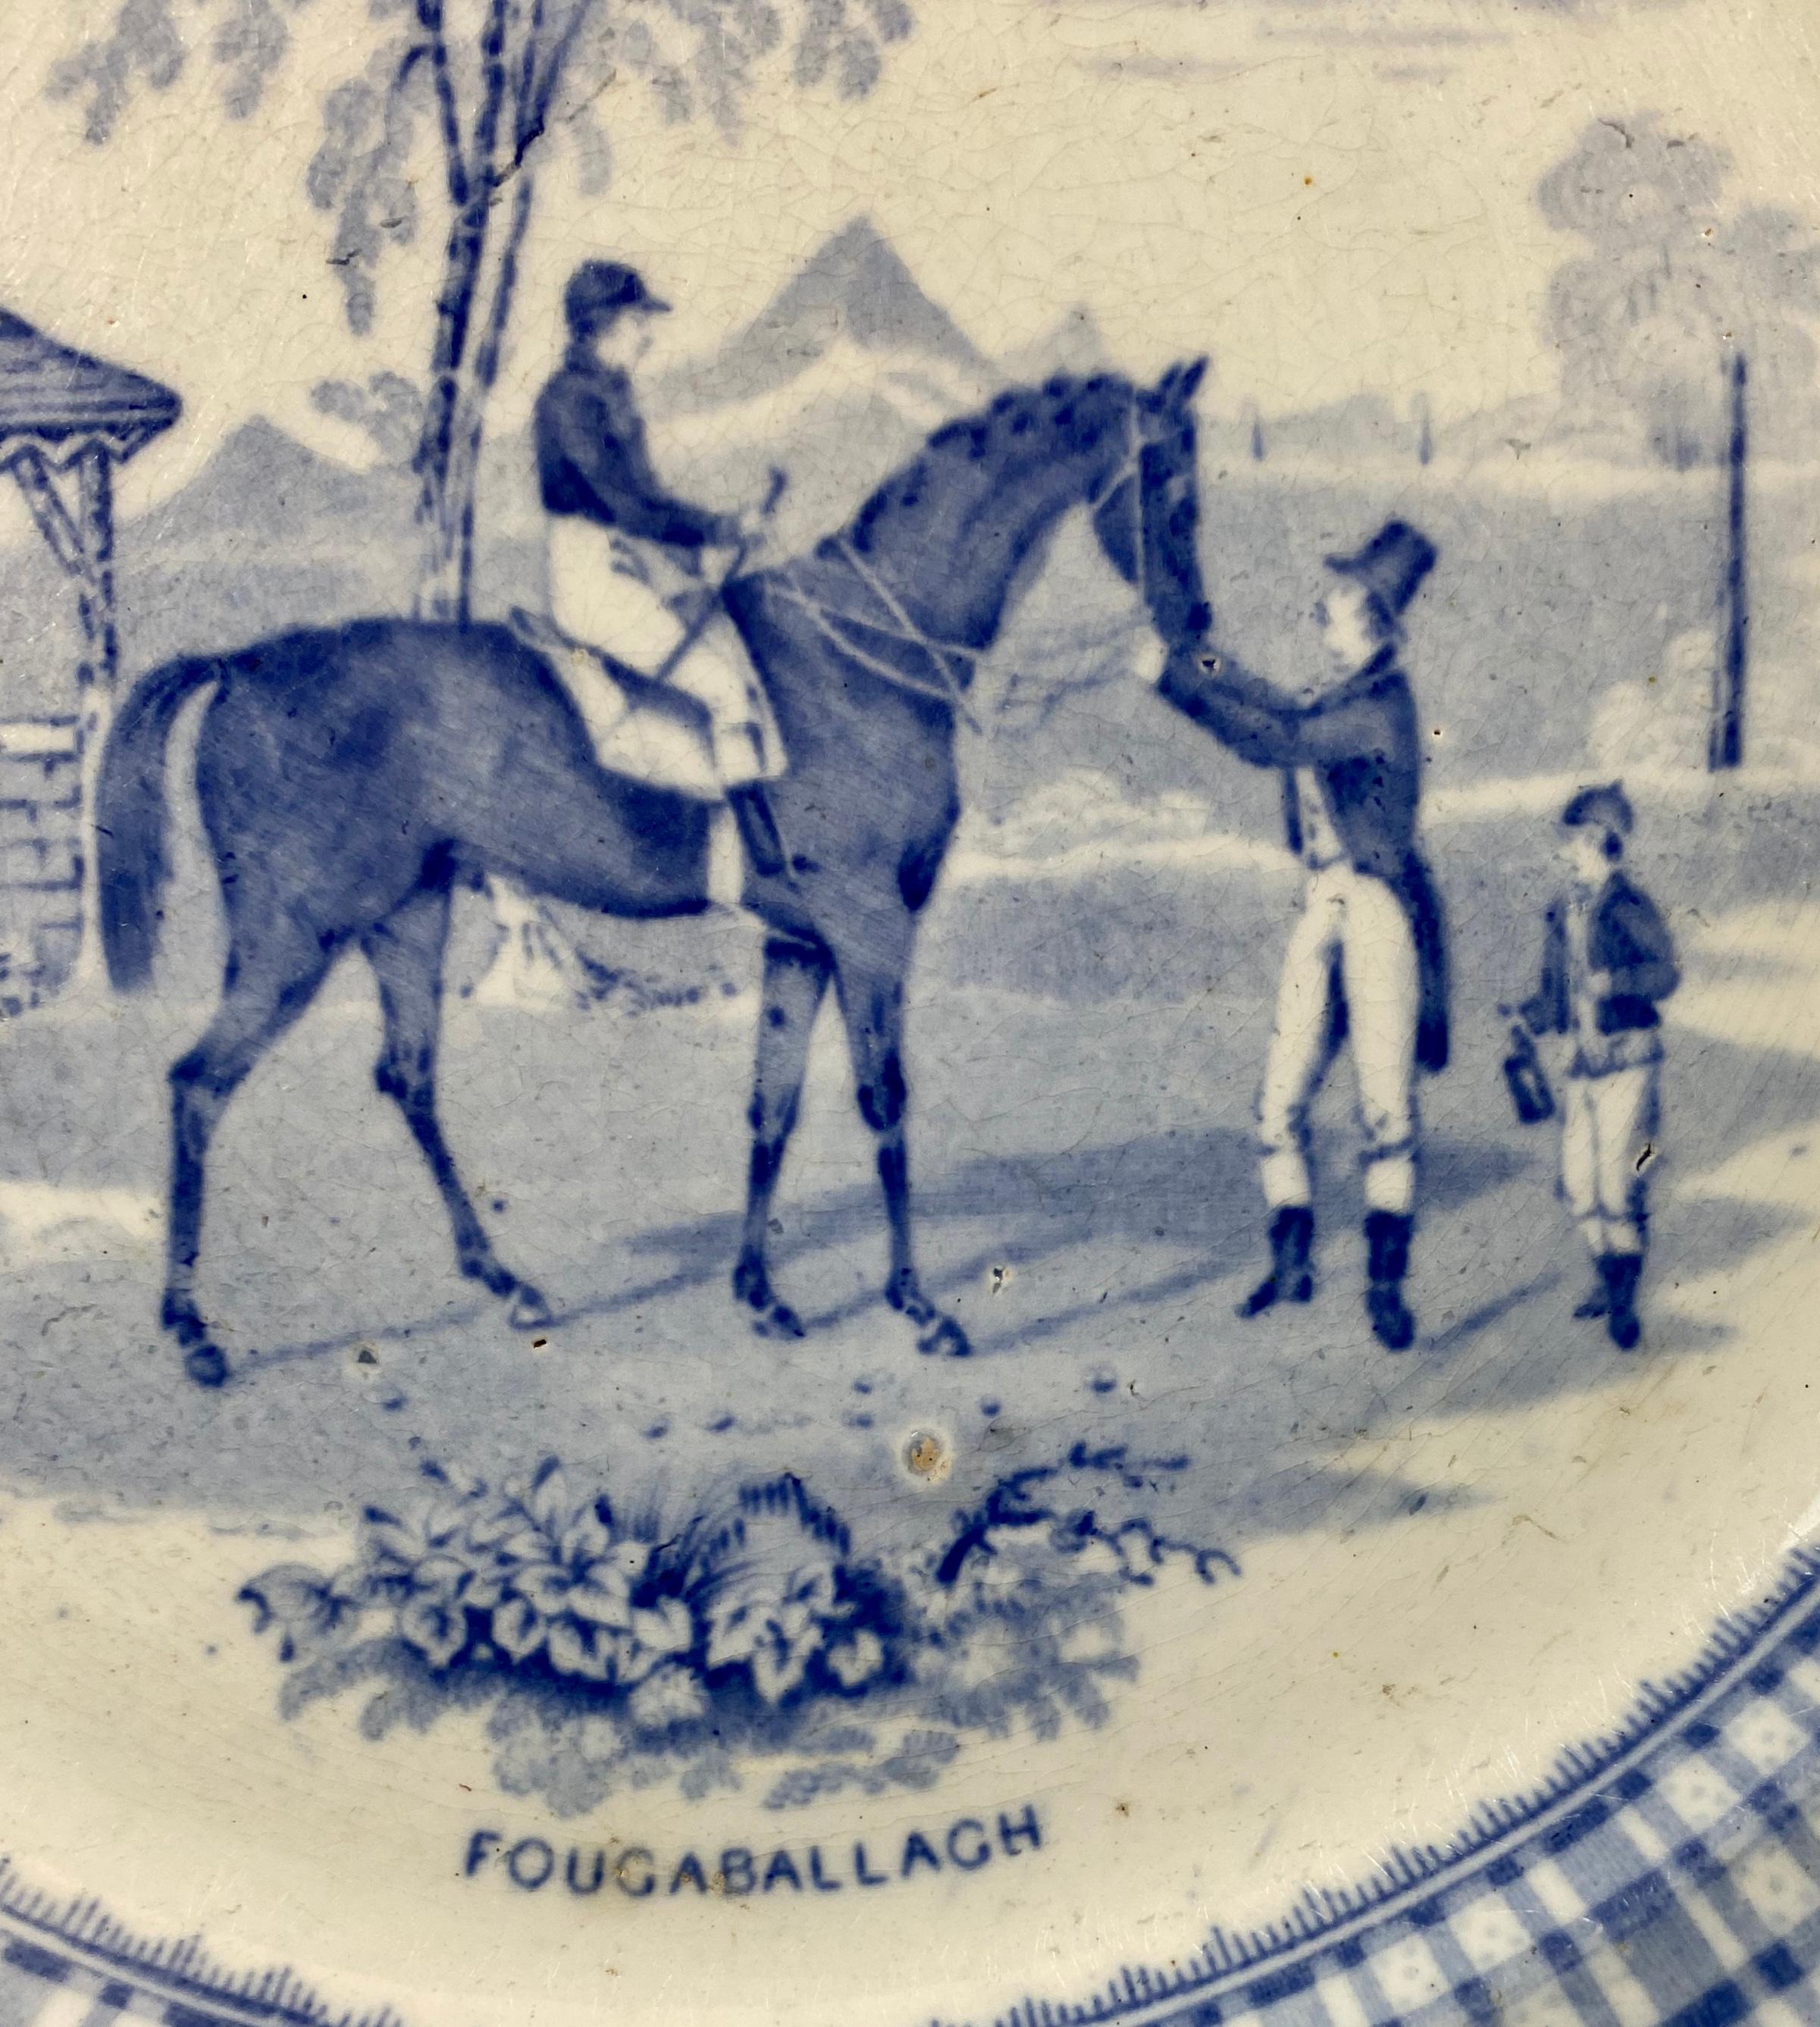 Victorian Scottish Potteries Racehorse Plate, Fougaballagh, circa 1845